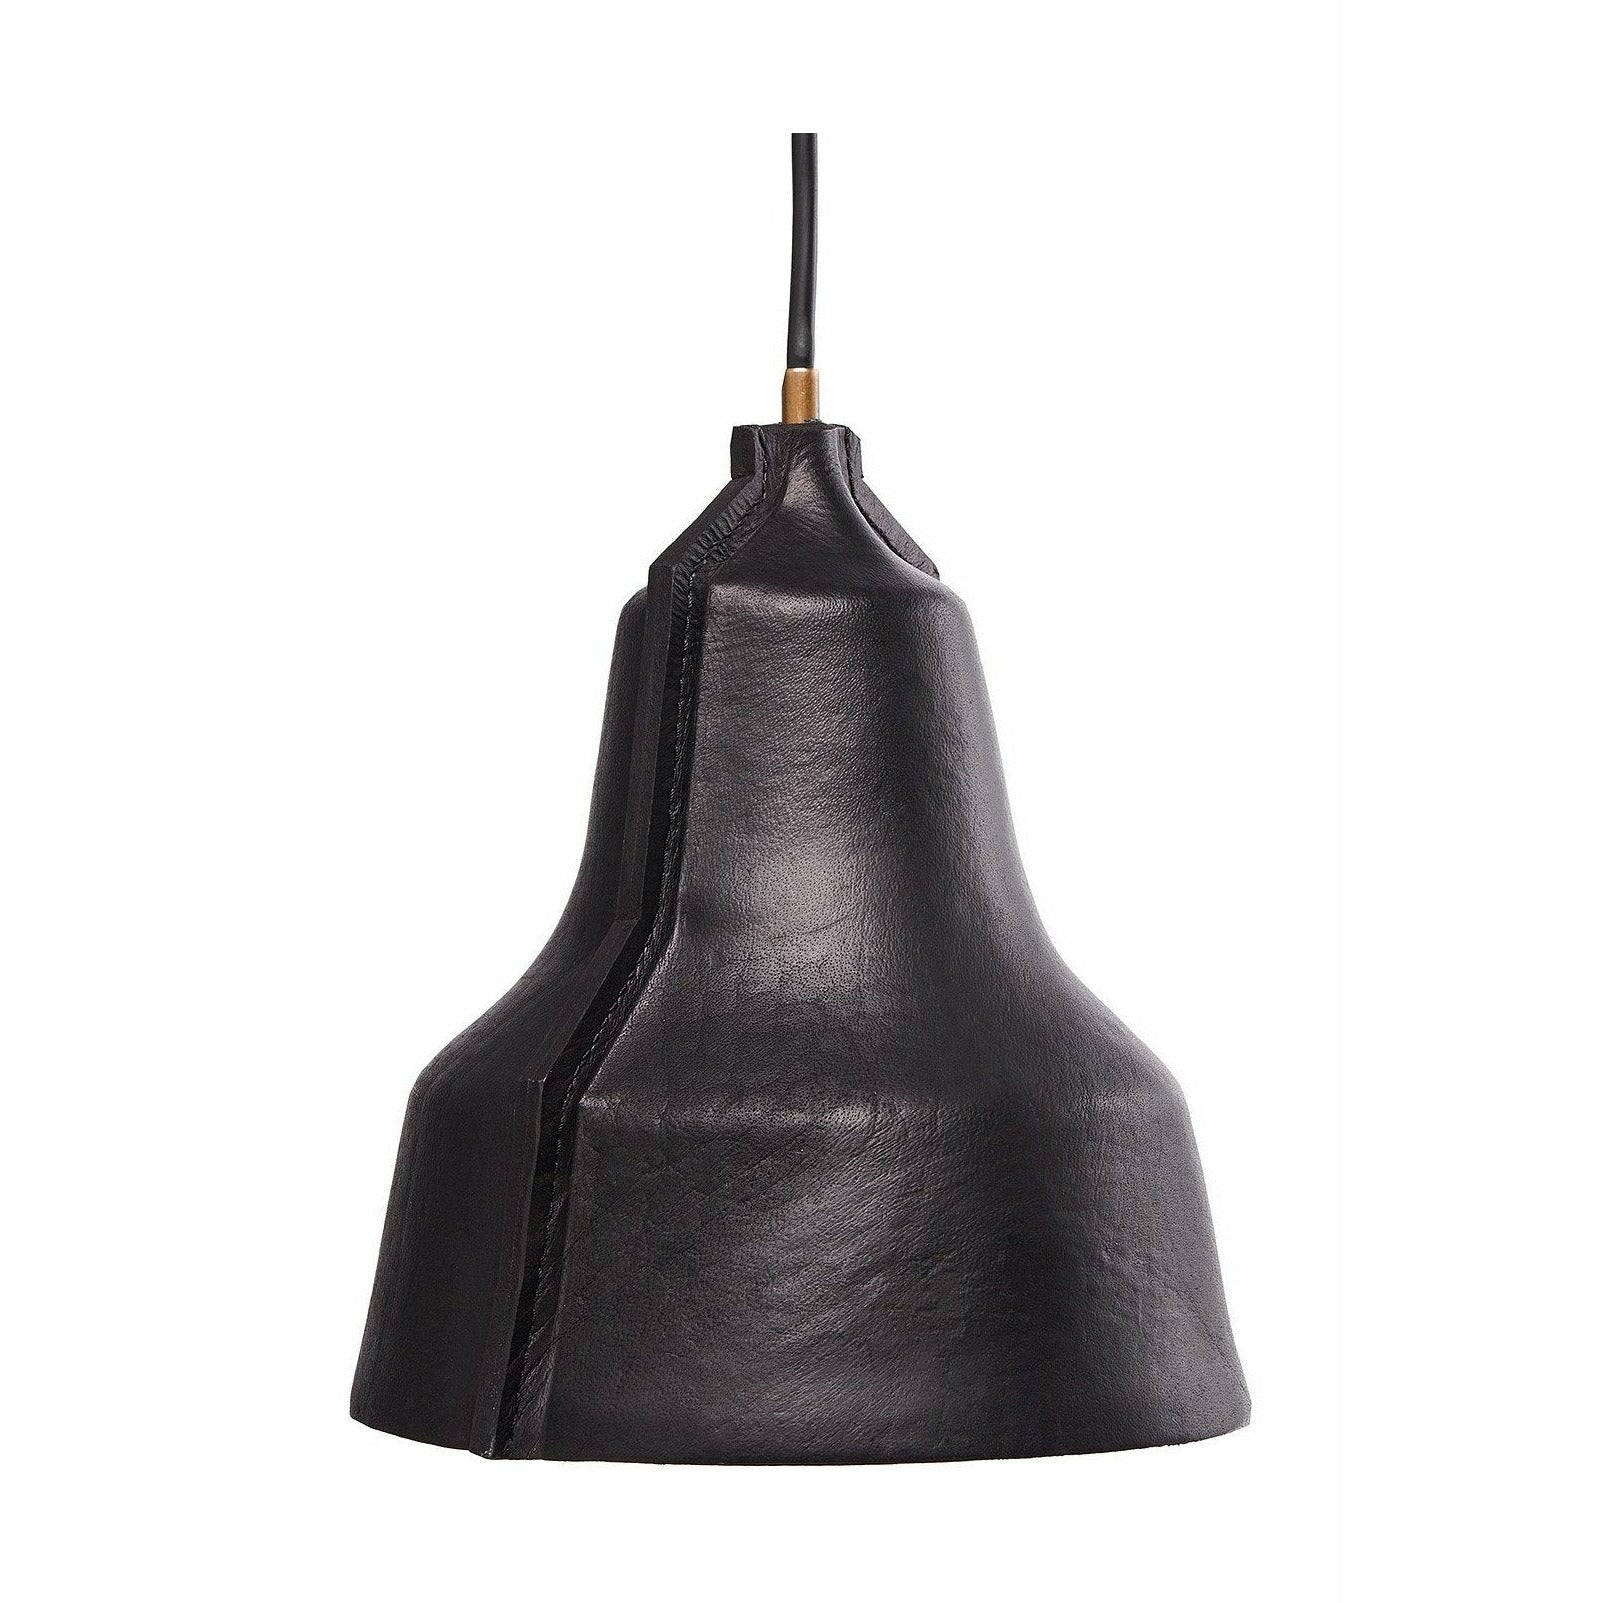 Puik Lloyd hanger lamp, zwart